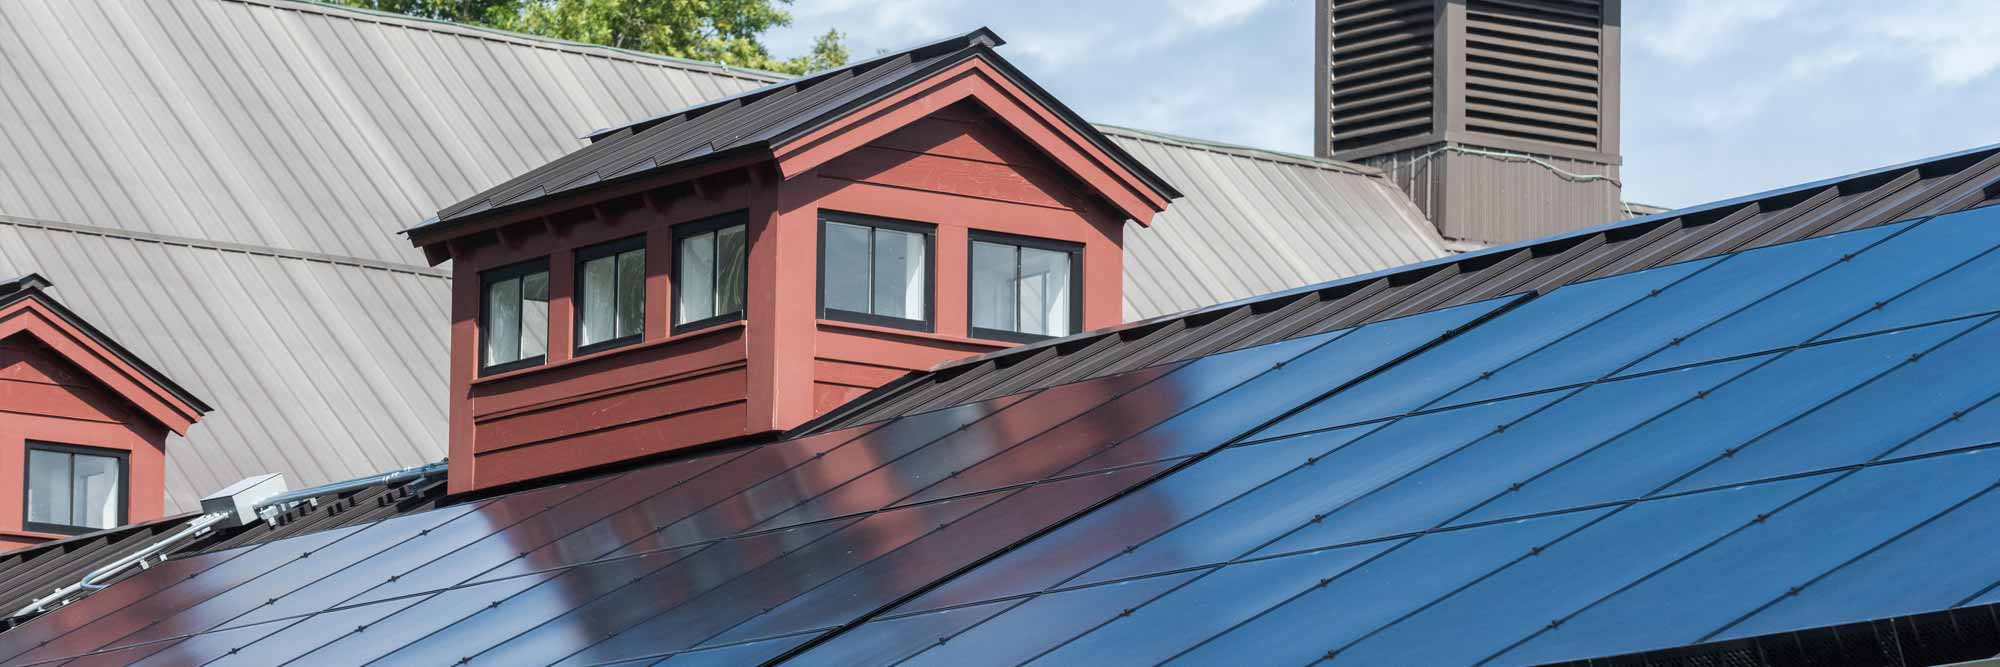 Barn solar panels Vassar College